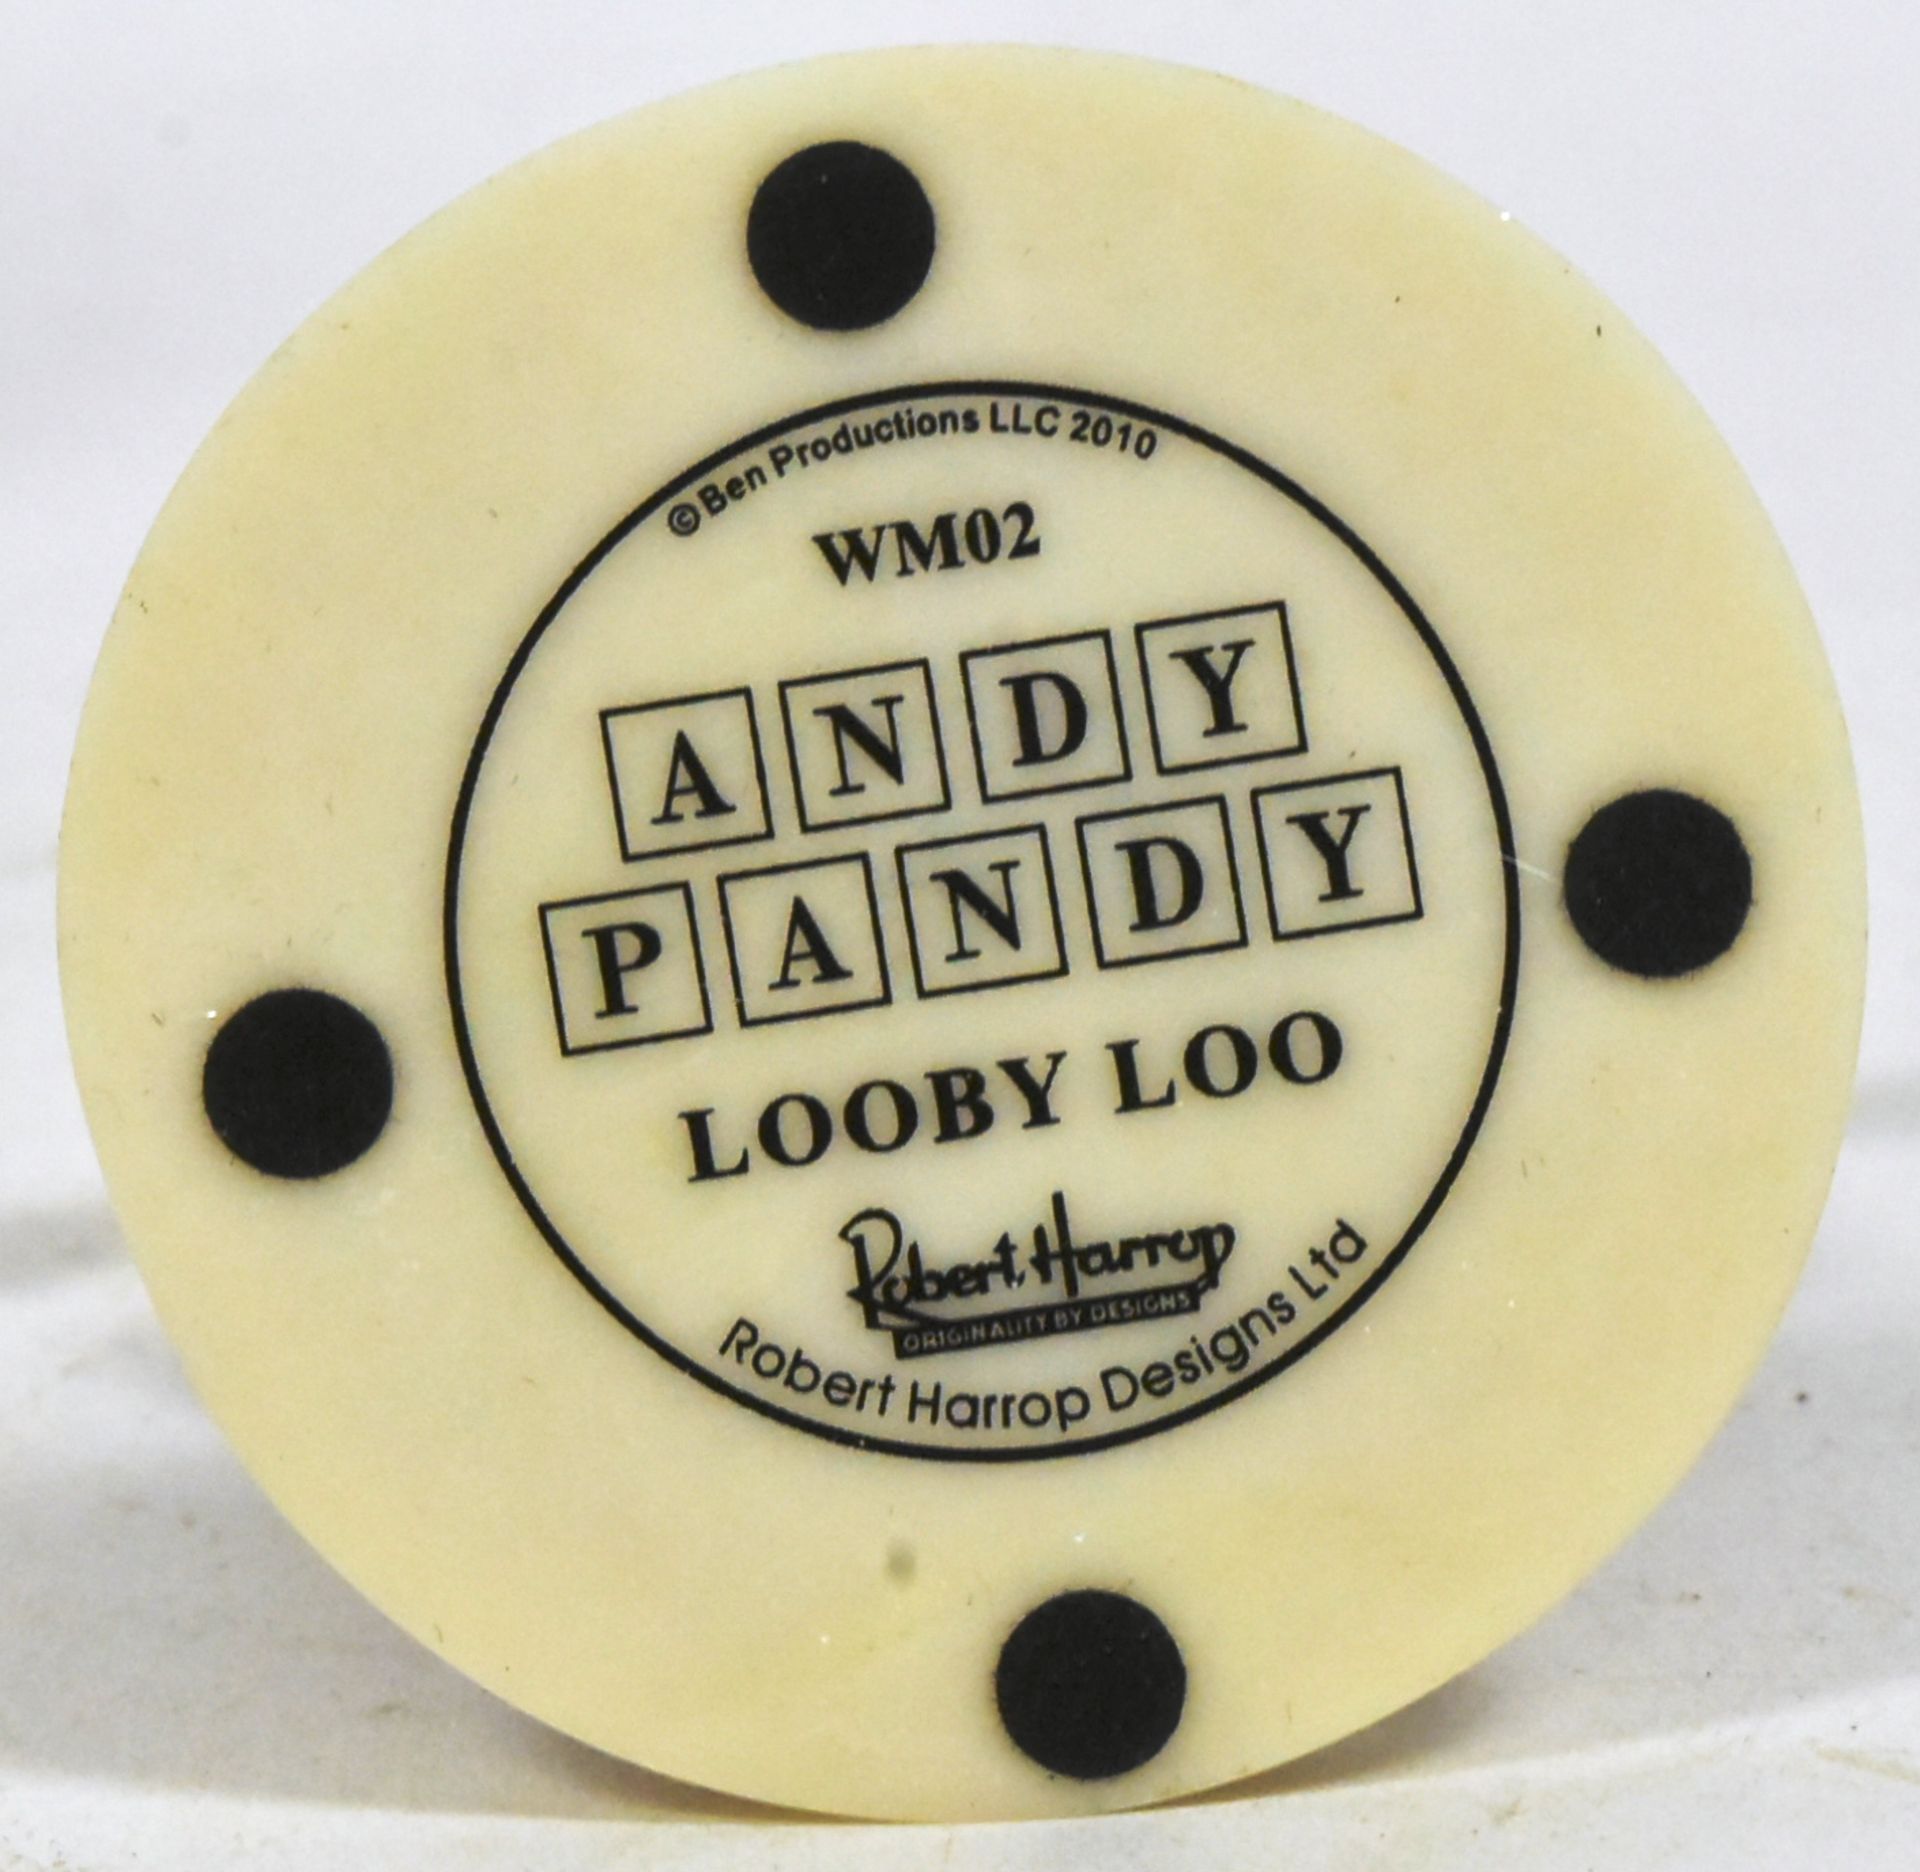 ANDY PANDY - ROBERT HARROP - BOXED FIGURE / STATUE - Image 5 of 5